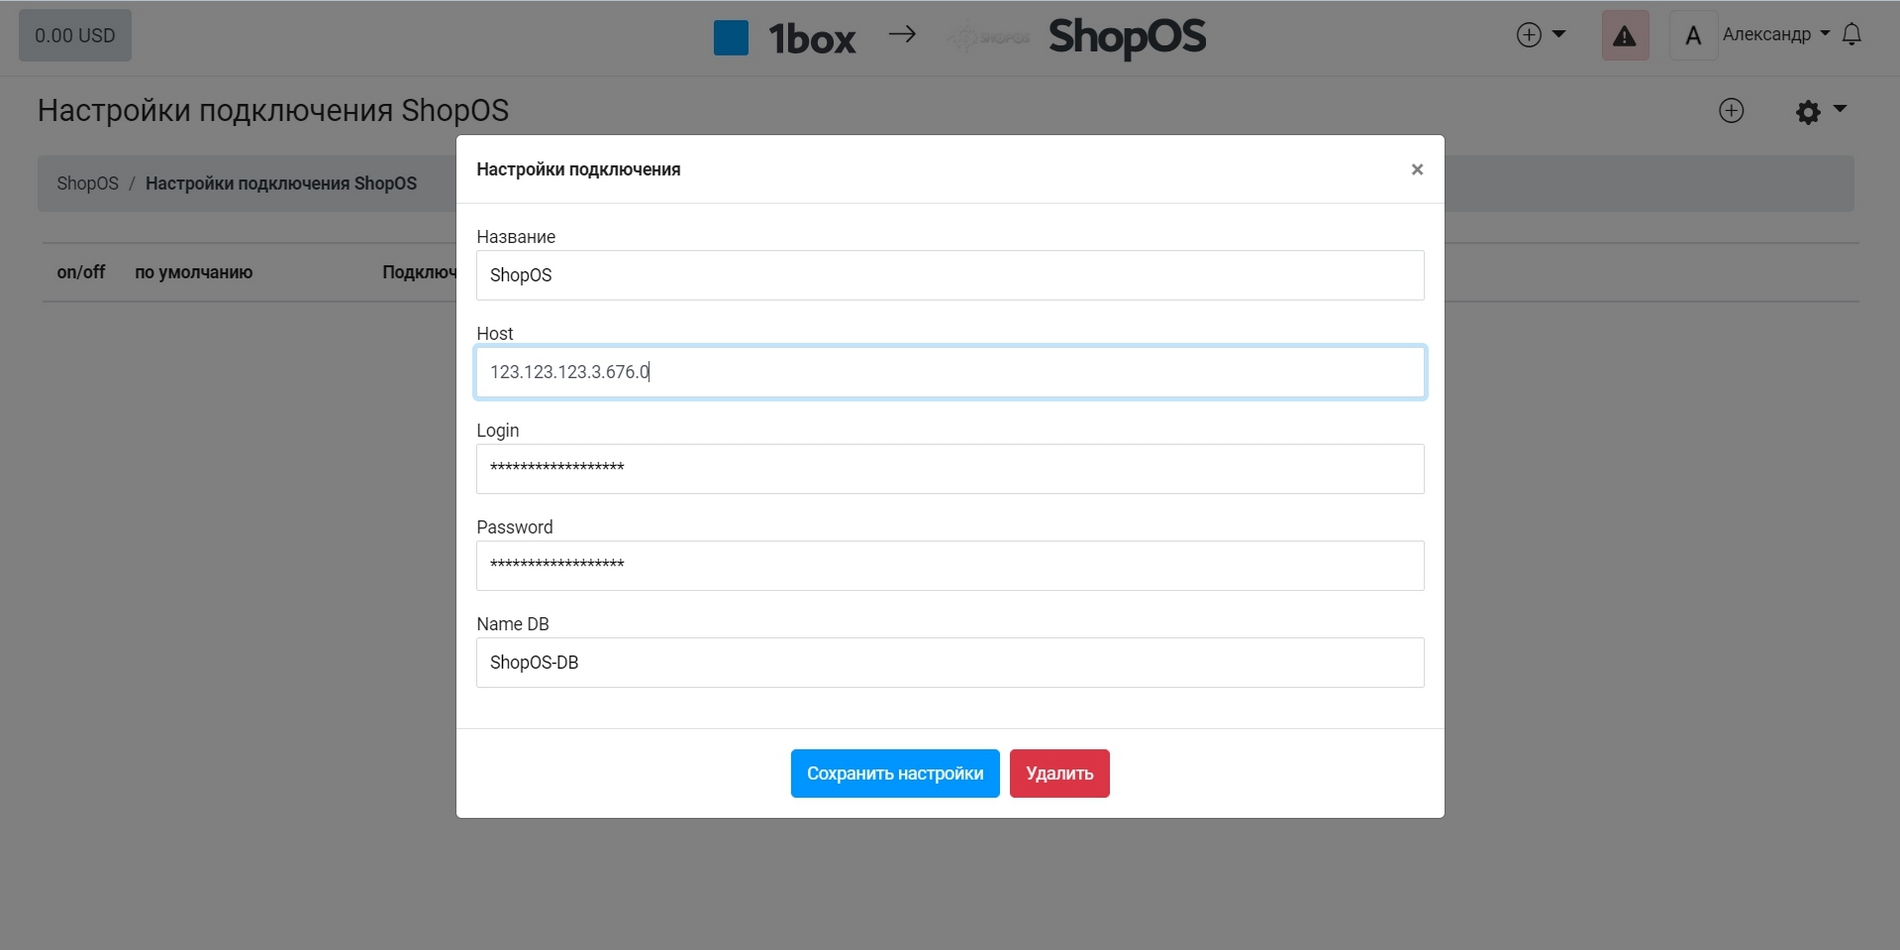 Application ShopOS